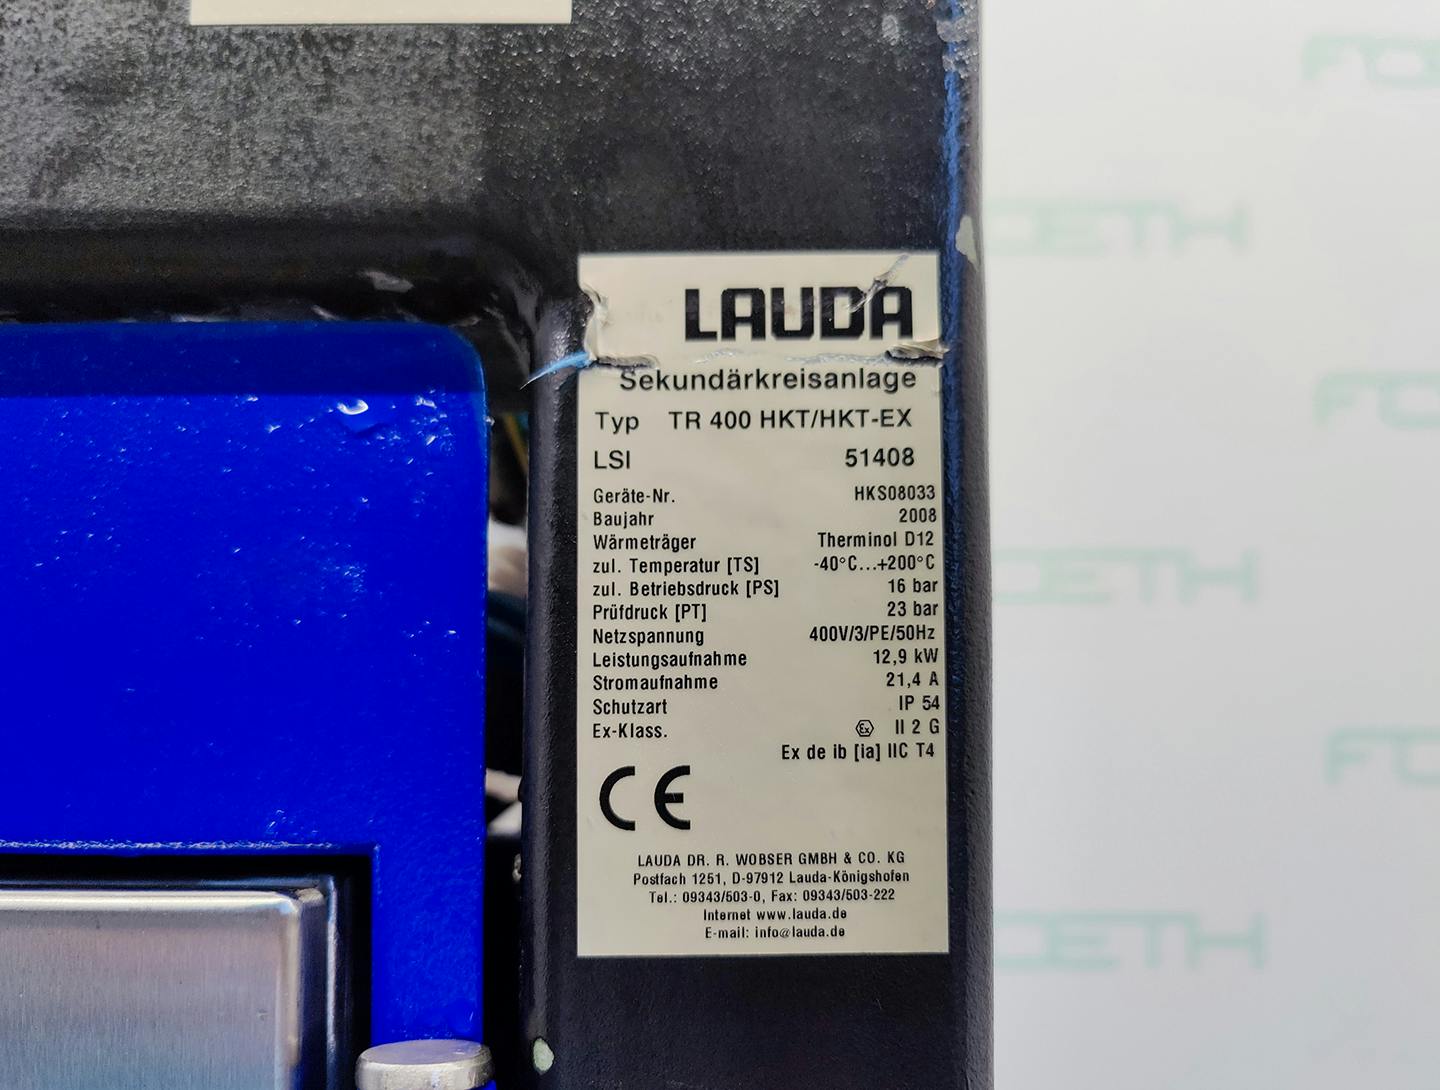 Lauda TR400 HKT/HKT-EX "secondary circuit system" - Thermorégulateur - image 6